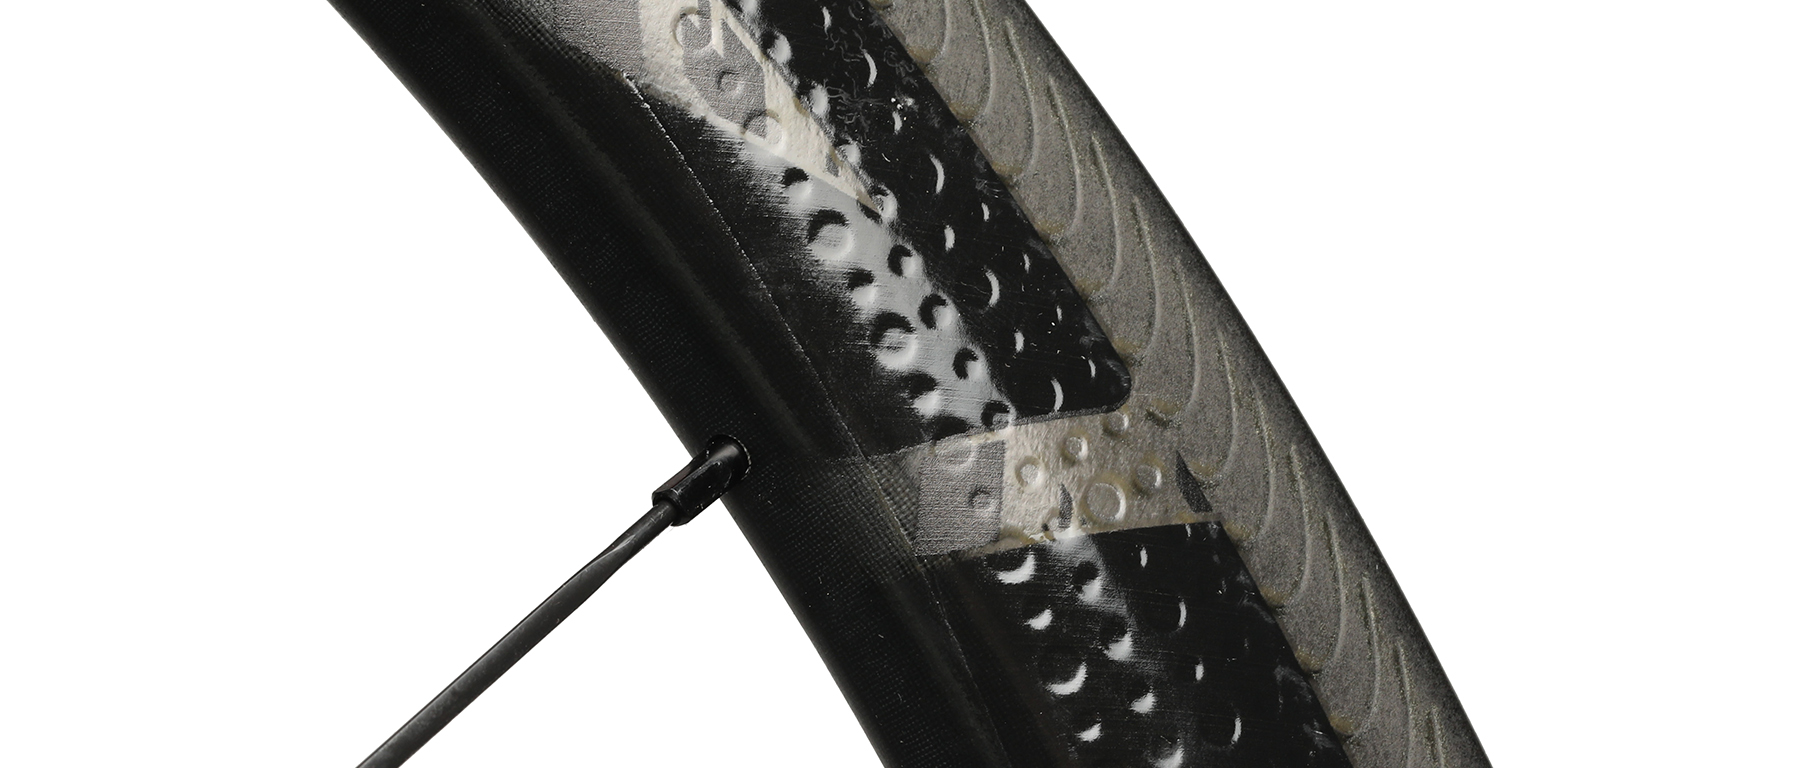 Zipp 303 NSW Carbon Clincher Rear Wheel